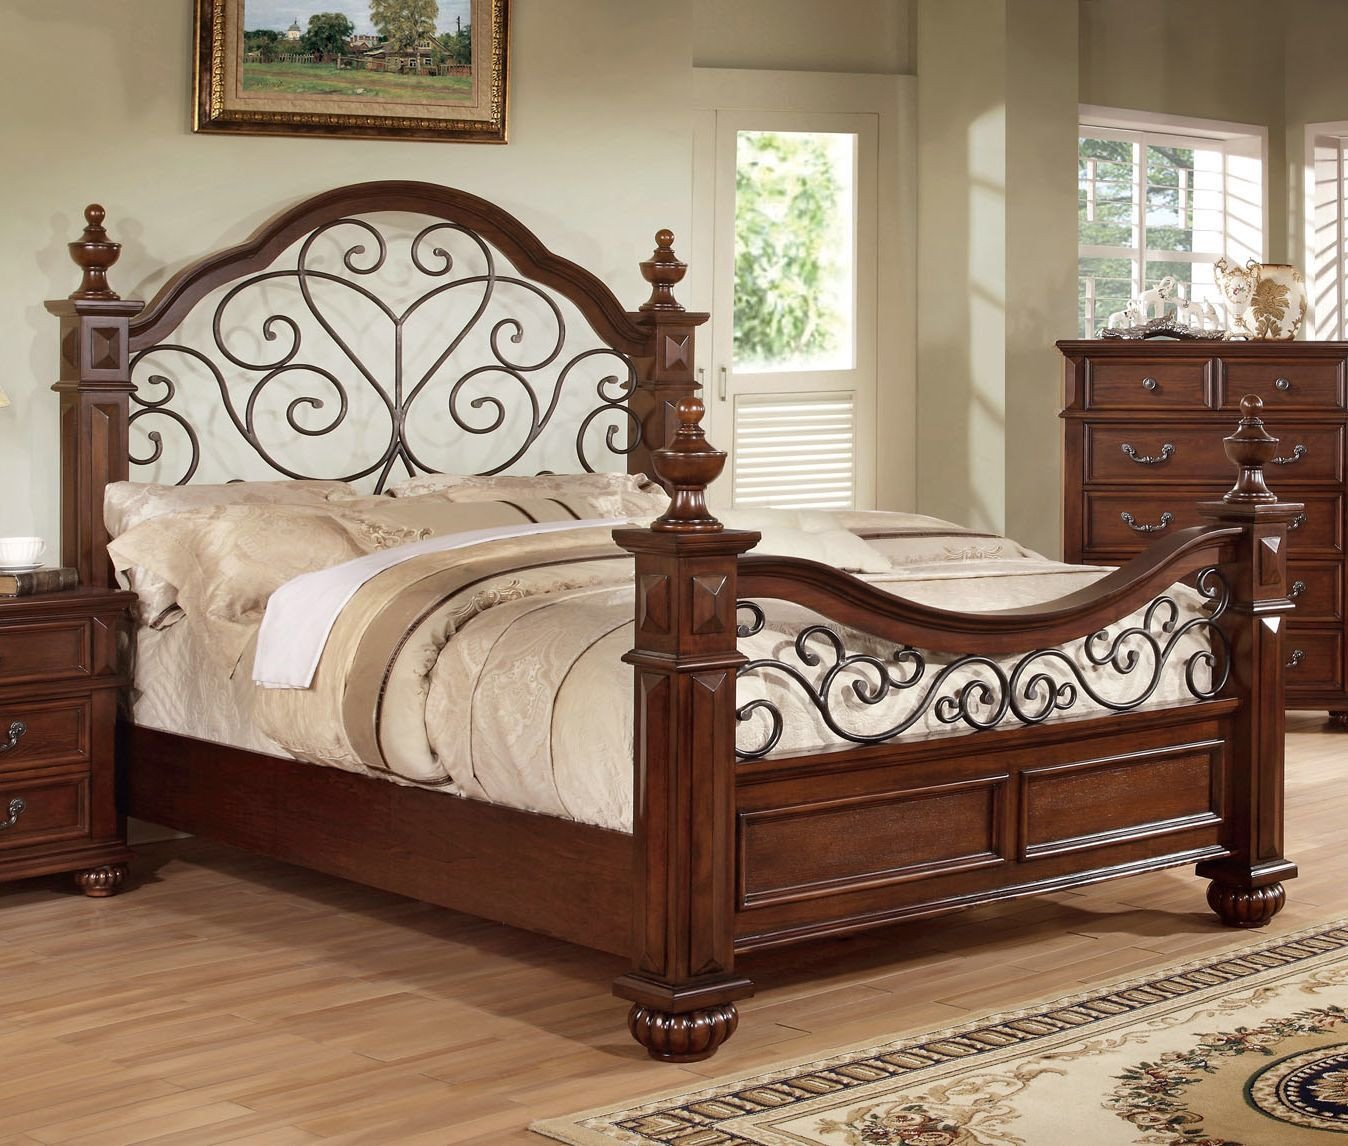 Bedroom Furniture for Sale New Lorrenzia Platform Configurable Bedroom Set